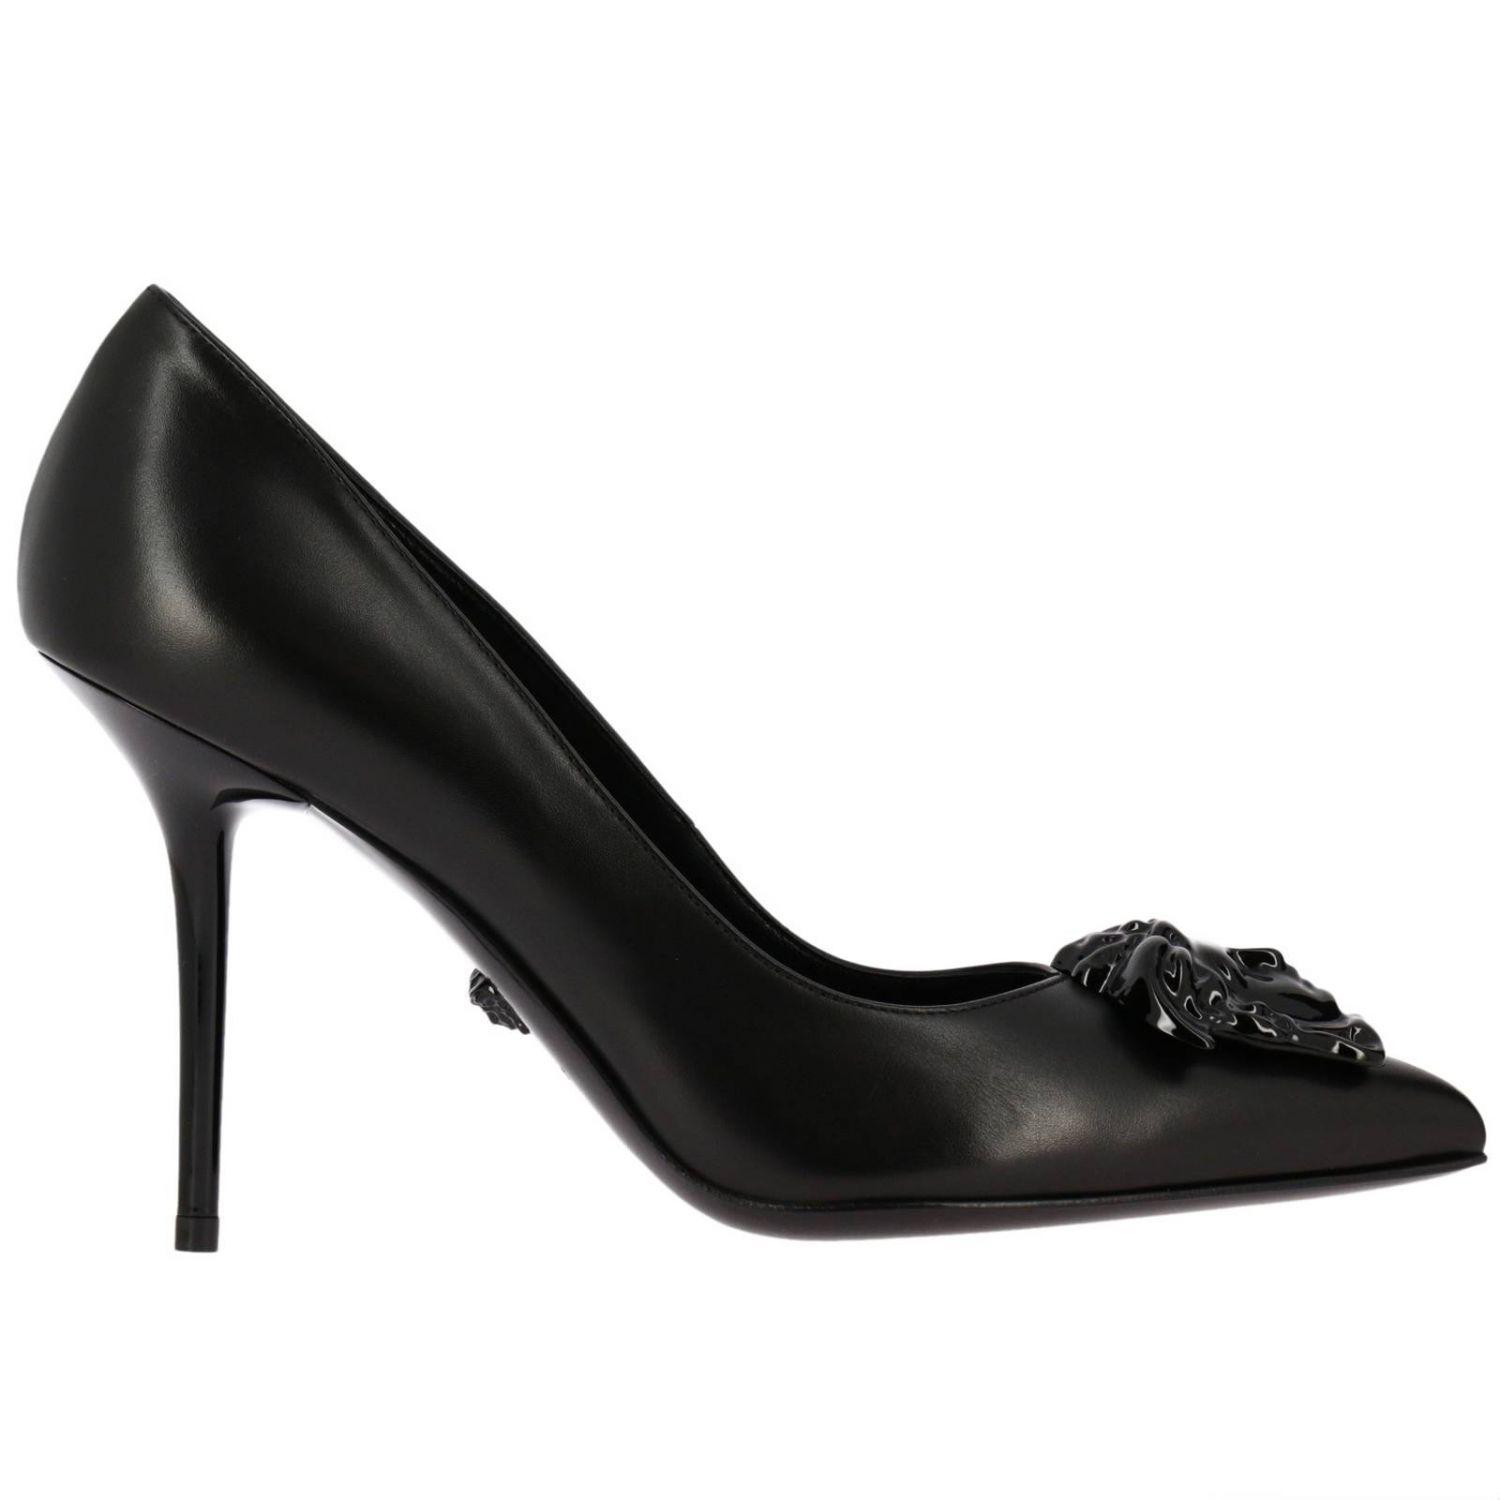 Lyst - Versace Pumps Shoes Women in Black